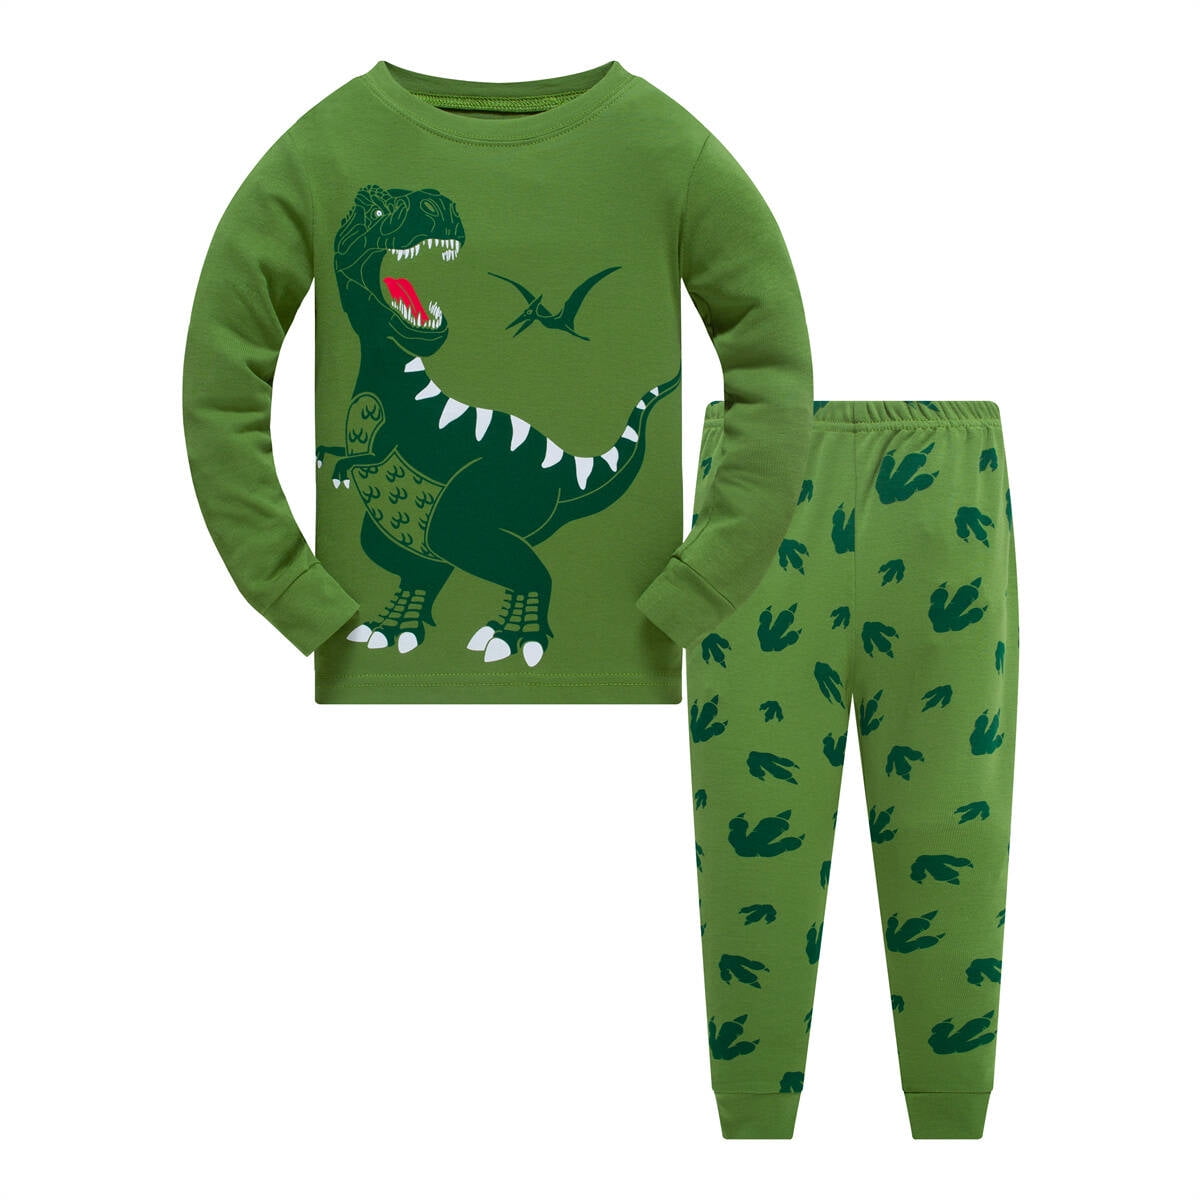 Popshion Toddler Boys Pajamas 100% Cotton T-Rex Dinosaur Sleepwear ...